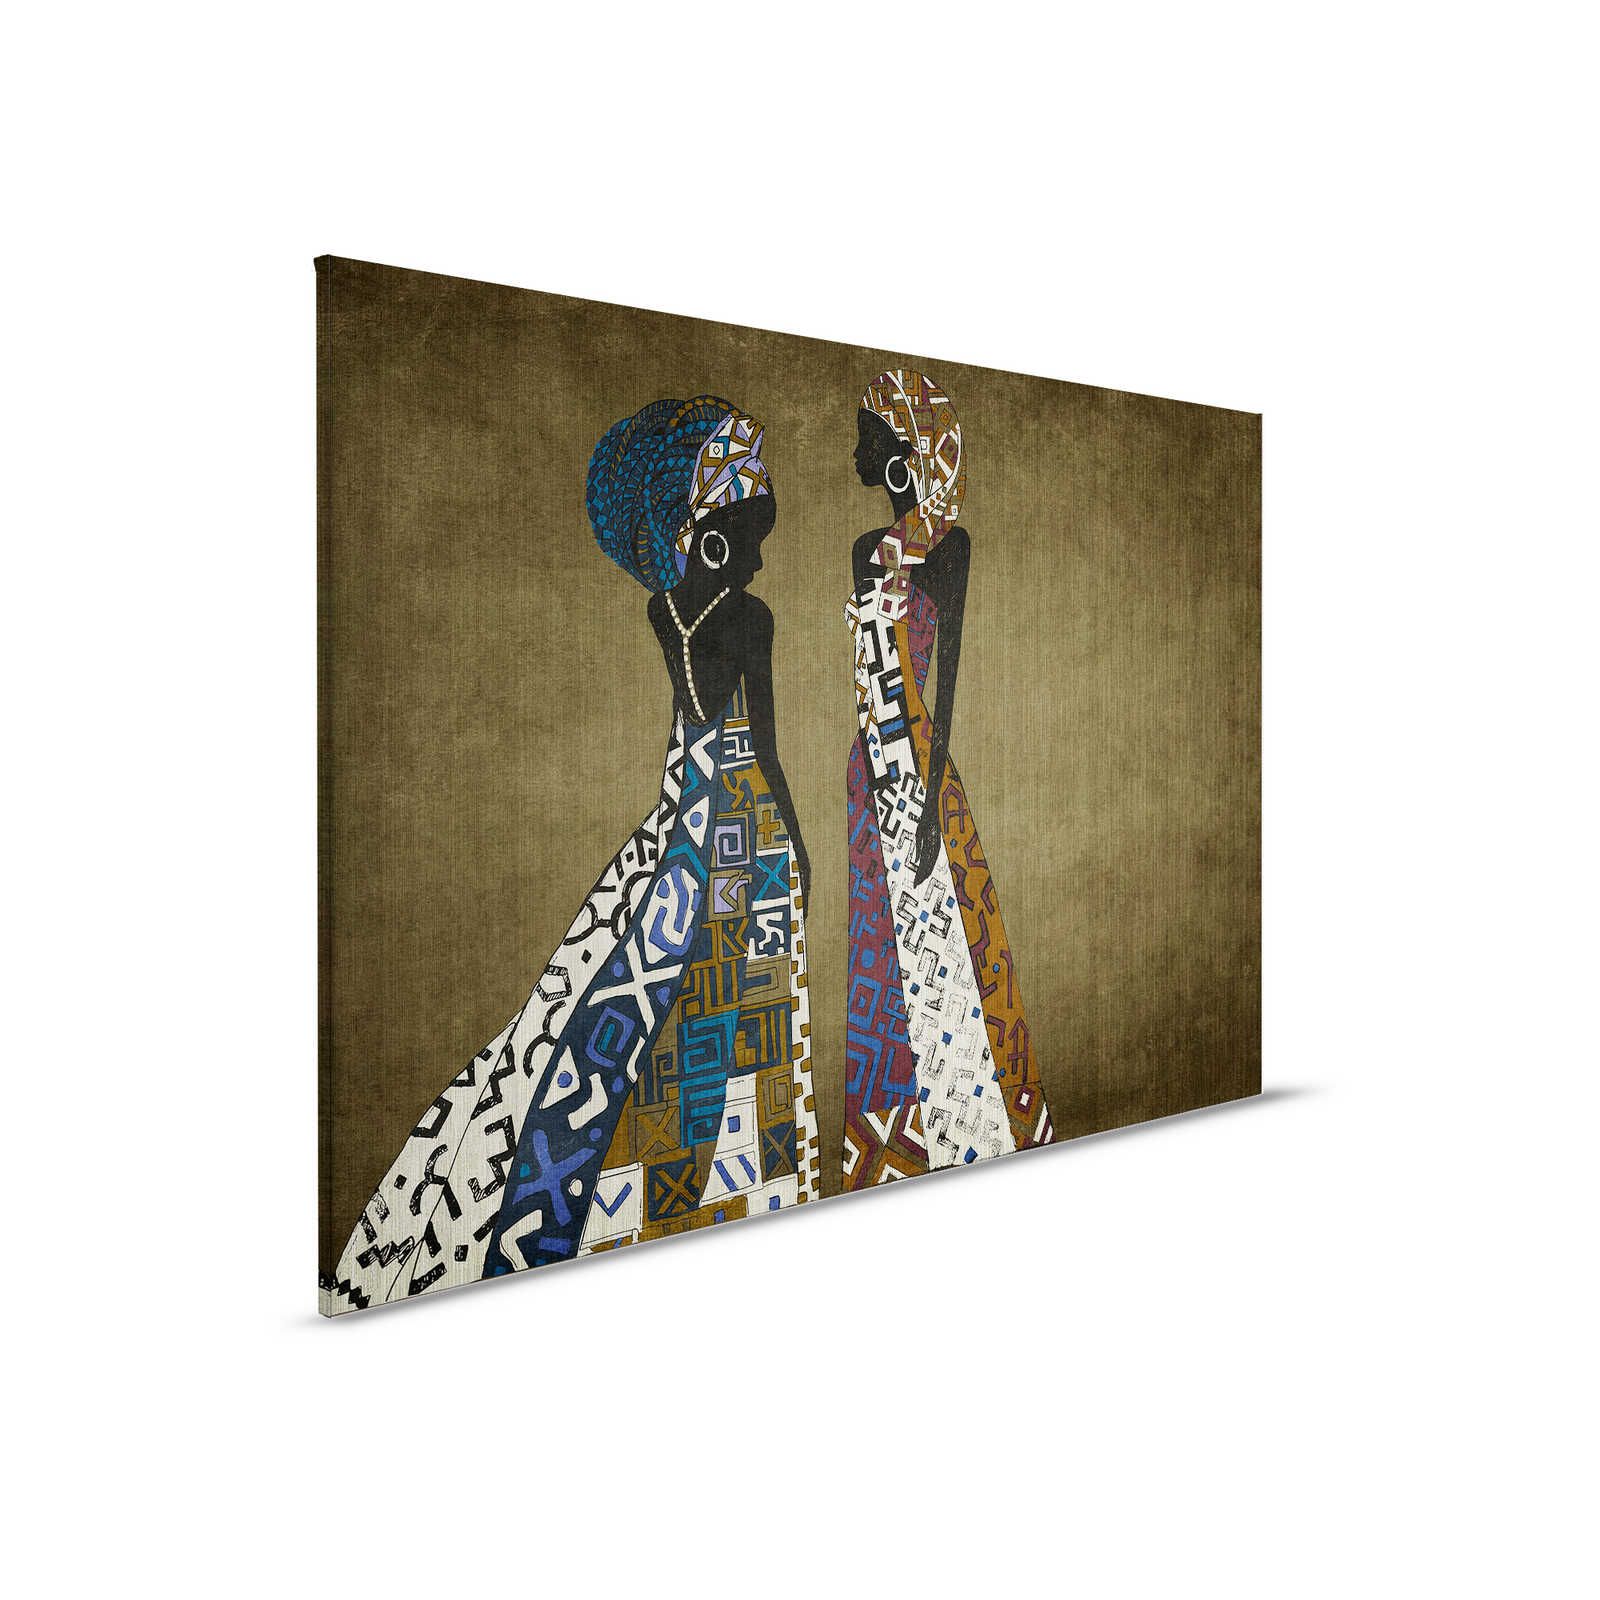         Nairobi 3 - Afrika Leinwandbild Dress Design mit Ethno Muster – 0,90 m x 0,60 m
    